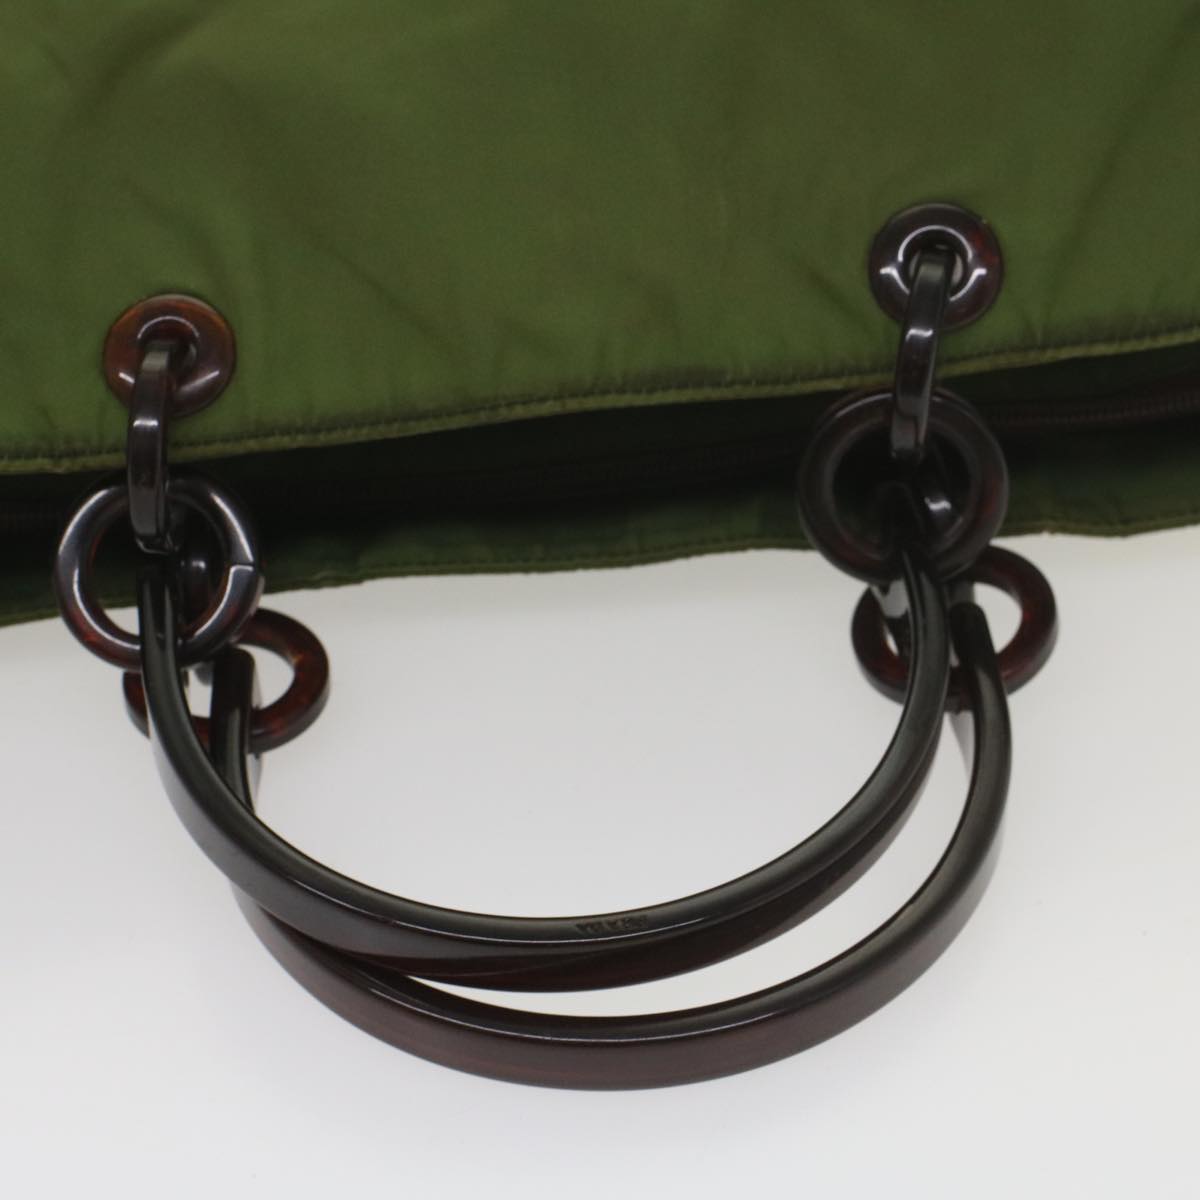 PRADA Hand Bag Nylon Green Auth bs8992